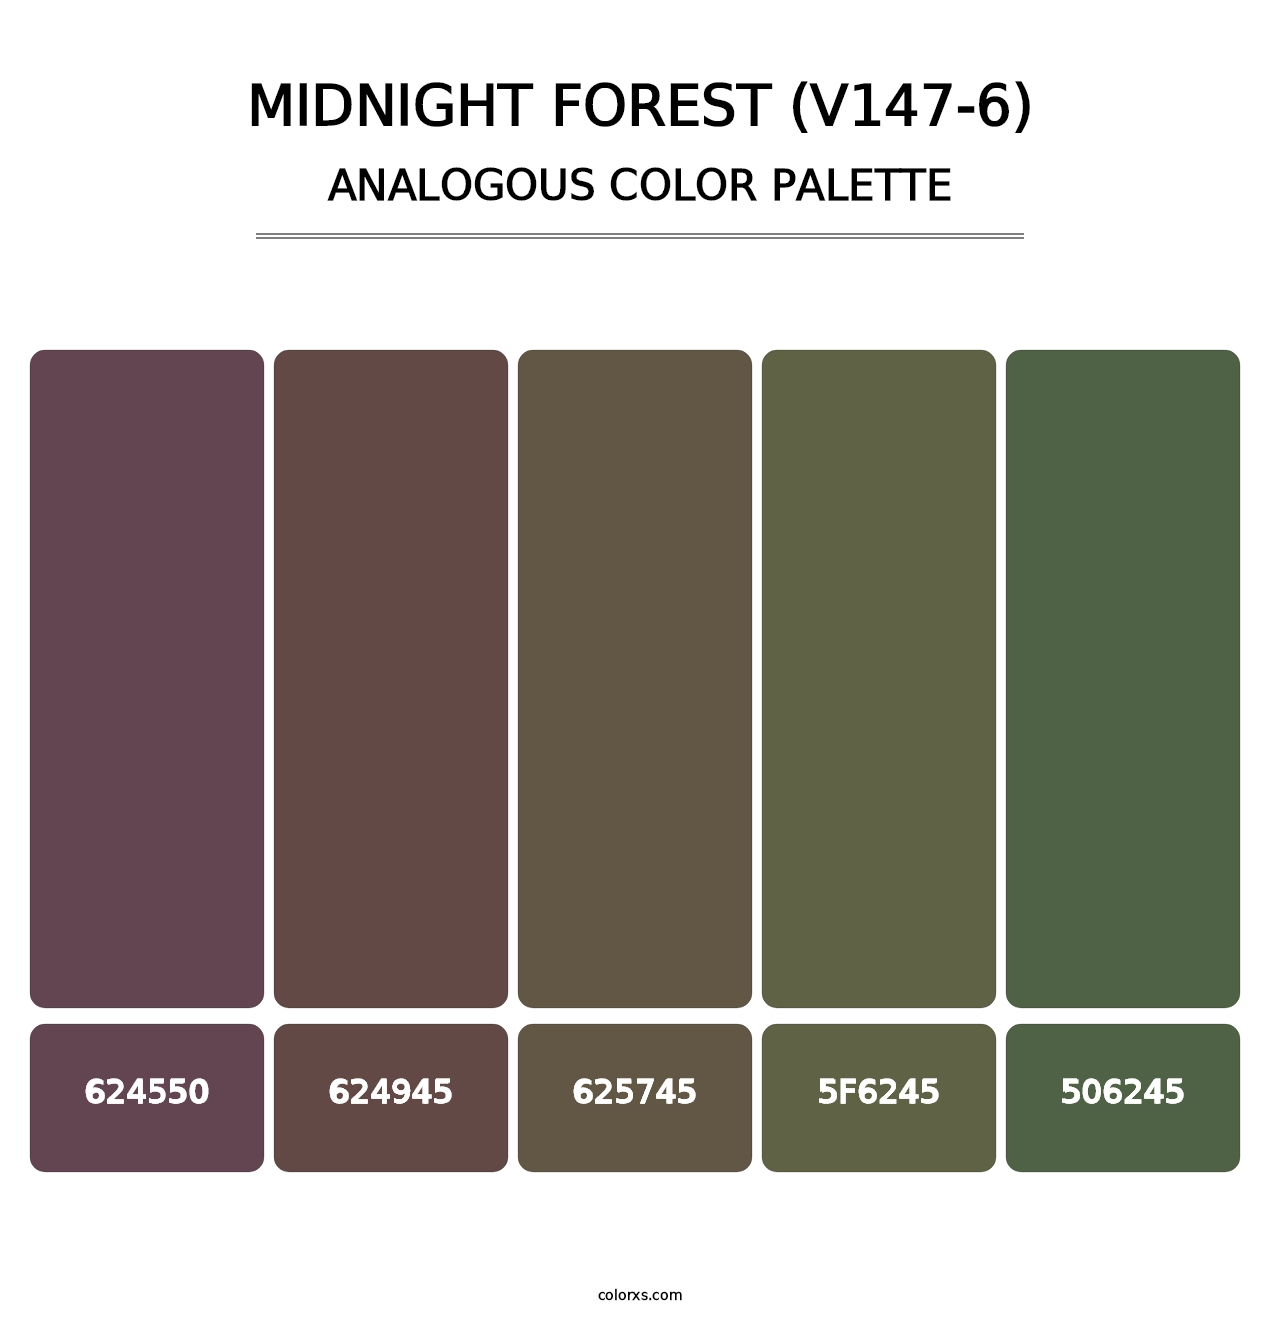 Midnight Forest (V147-6) - Analogous Color Palette